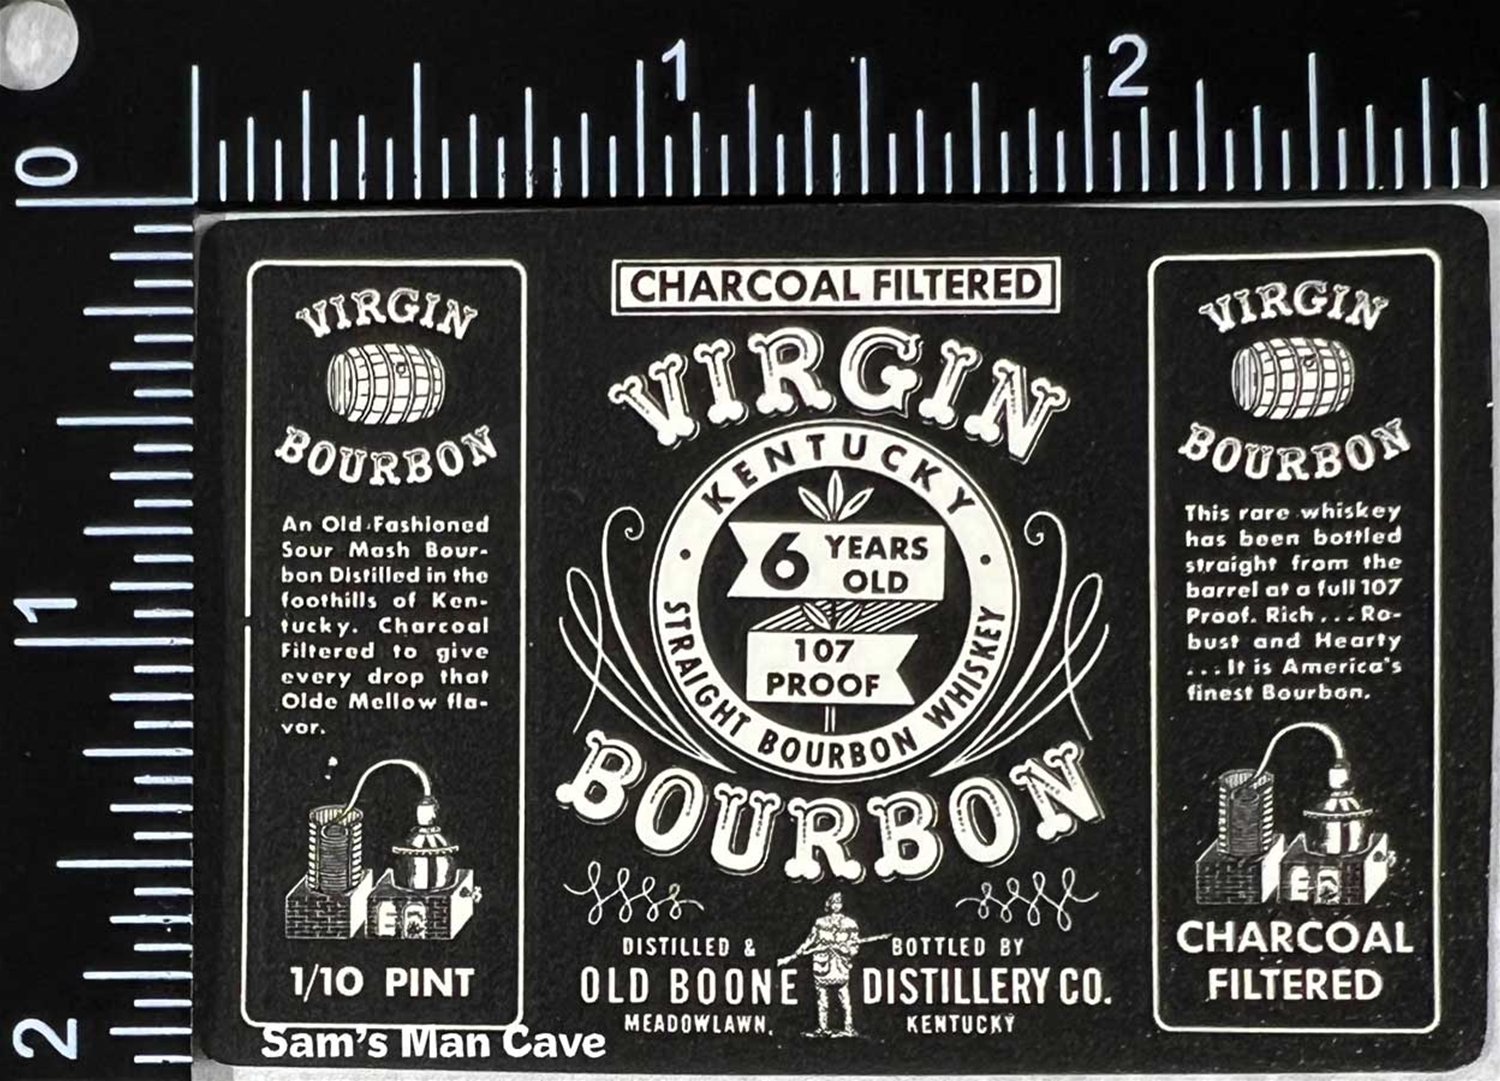 Virgin Bourbon 107 Proof Whiskey Label